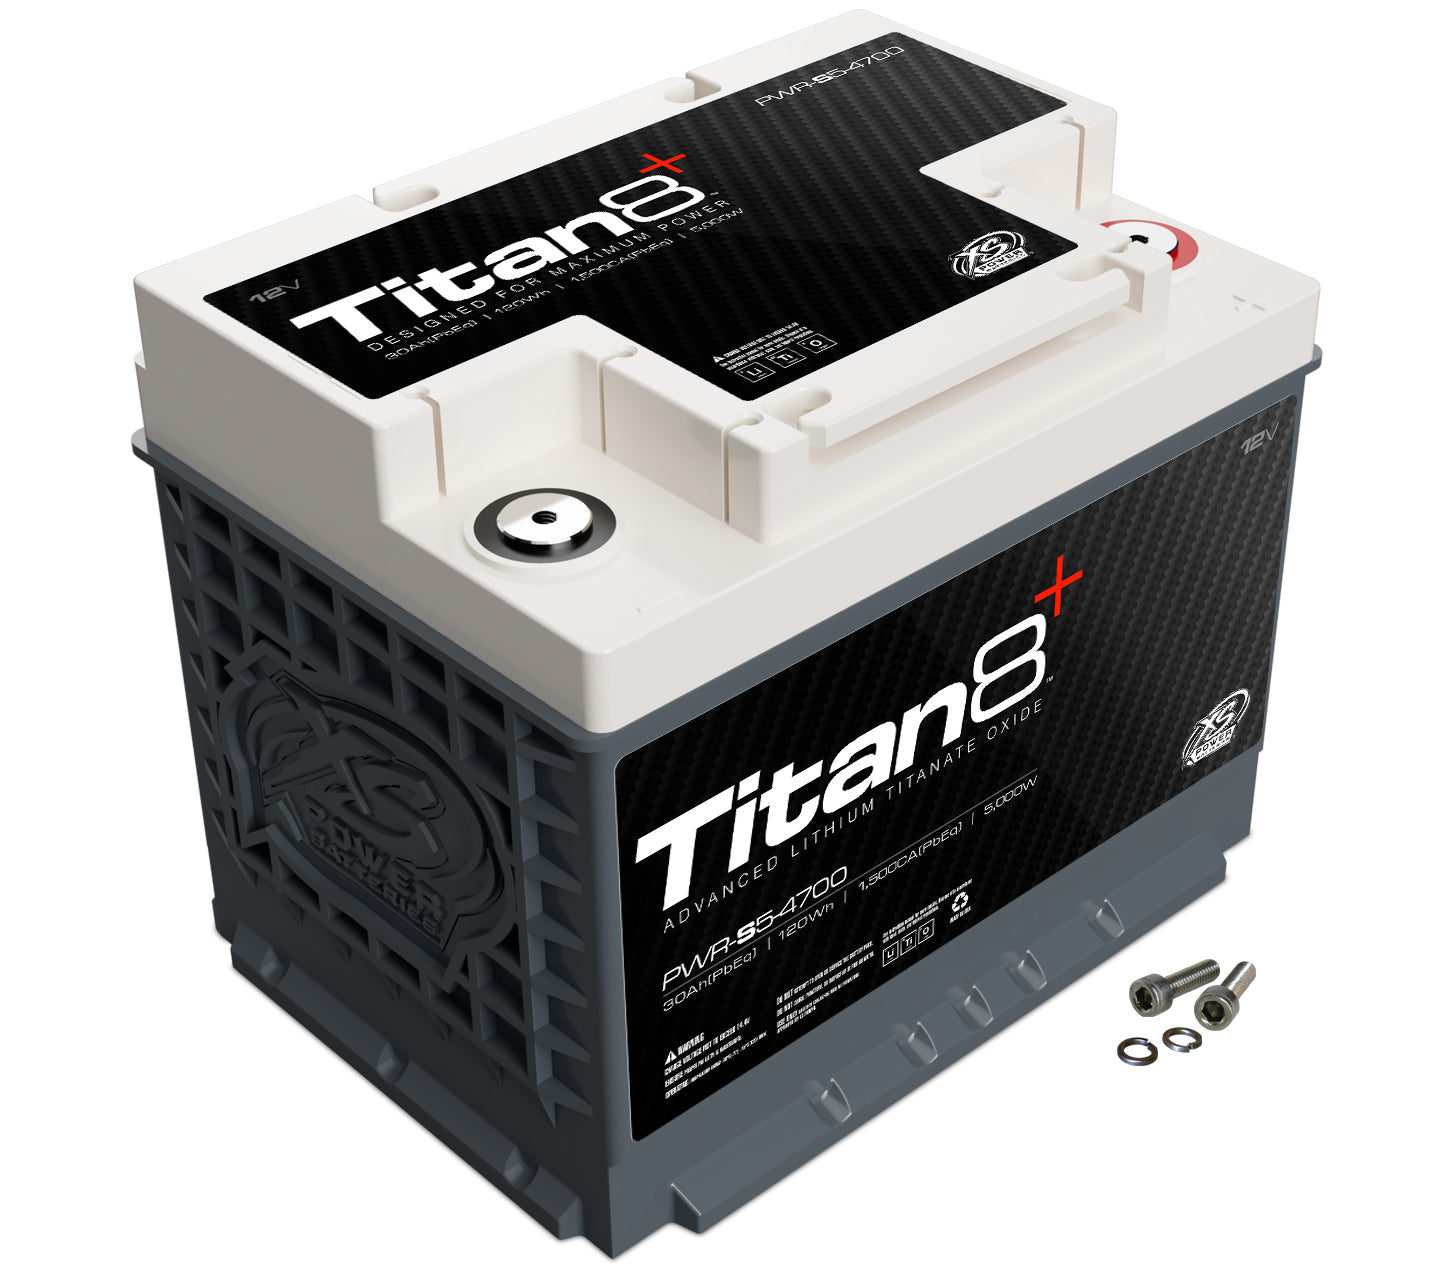 (OPEN BOX) PWR-S5-4700 XS Power Titan8 12VDC Group 47 Lithium LTO Car Audio Vehicle Battery 5000W 120Wh